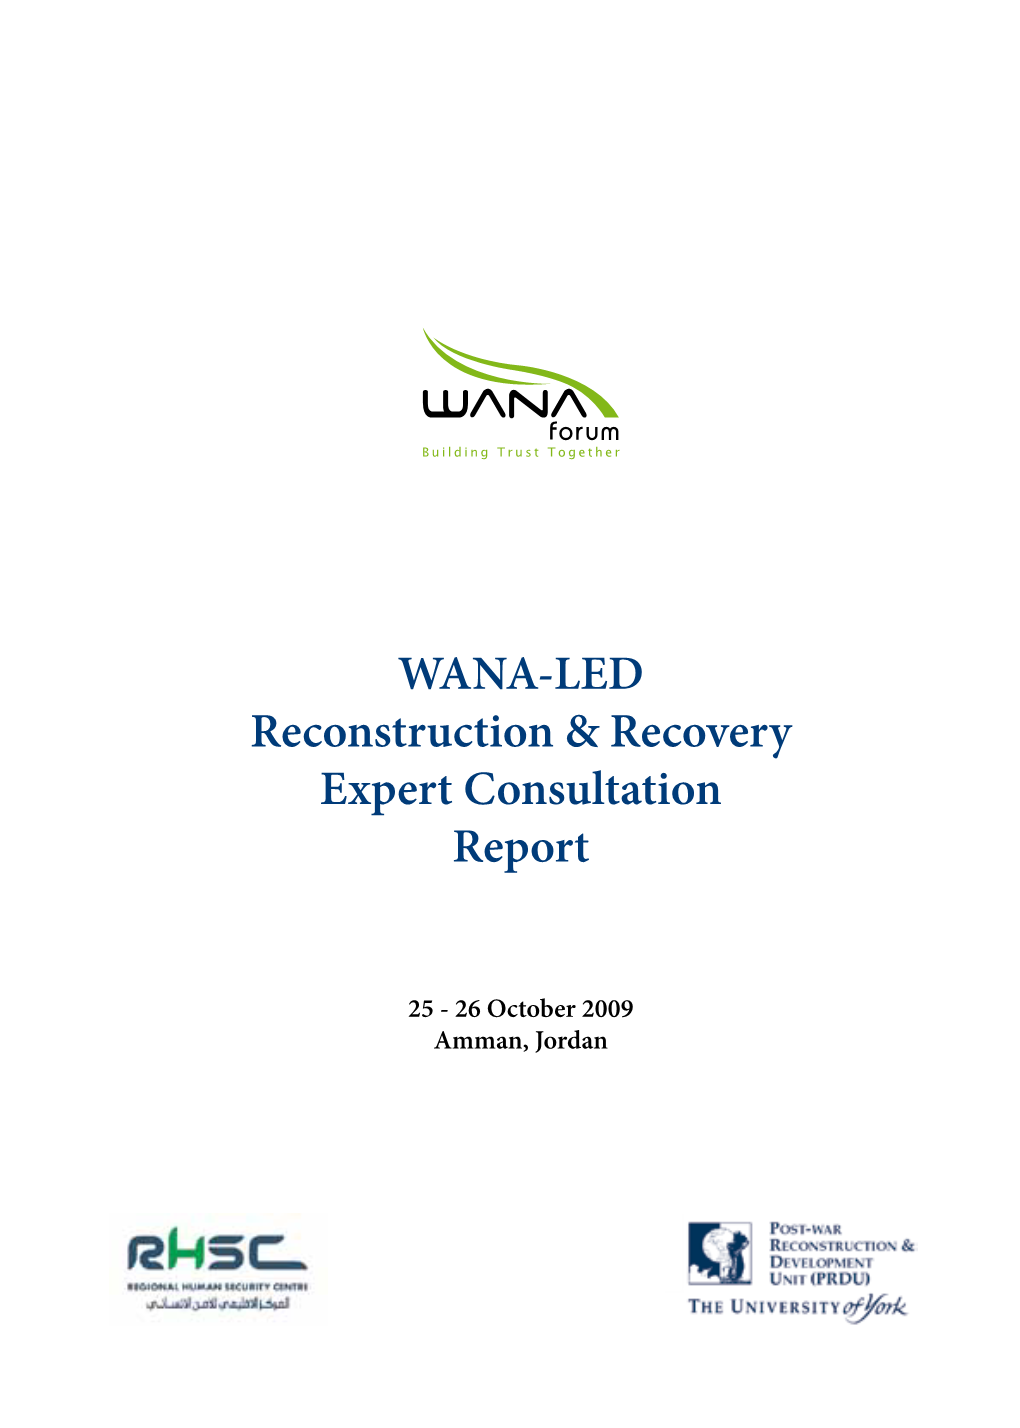 WANA-LED Reconstruction & Recovery Expert Consultation Report